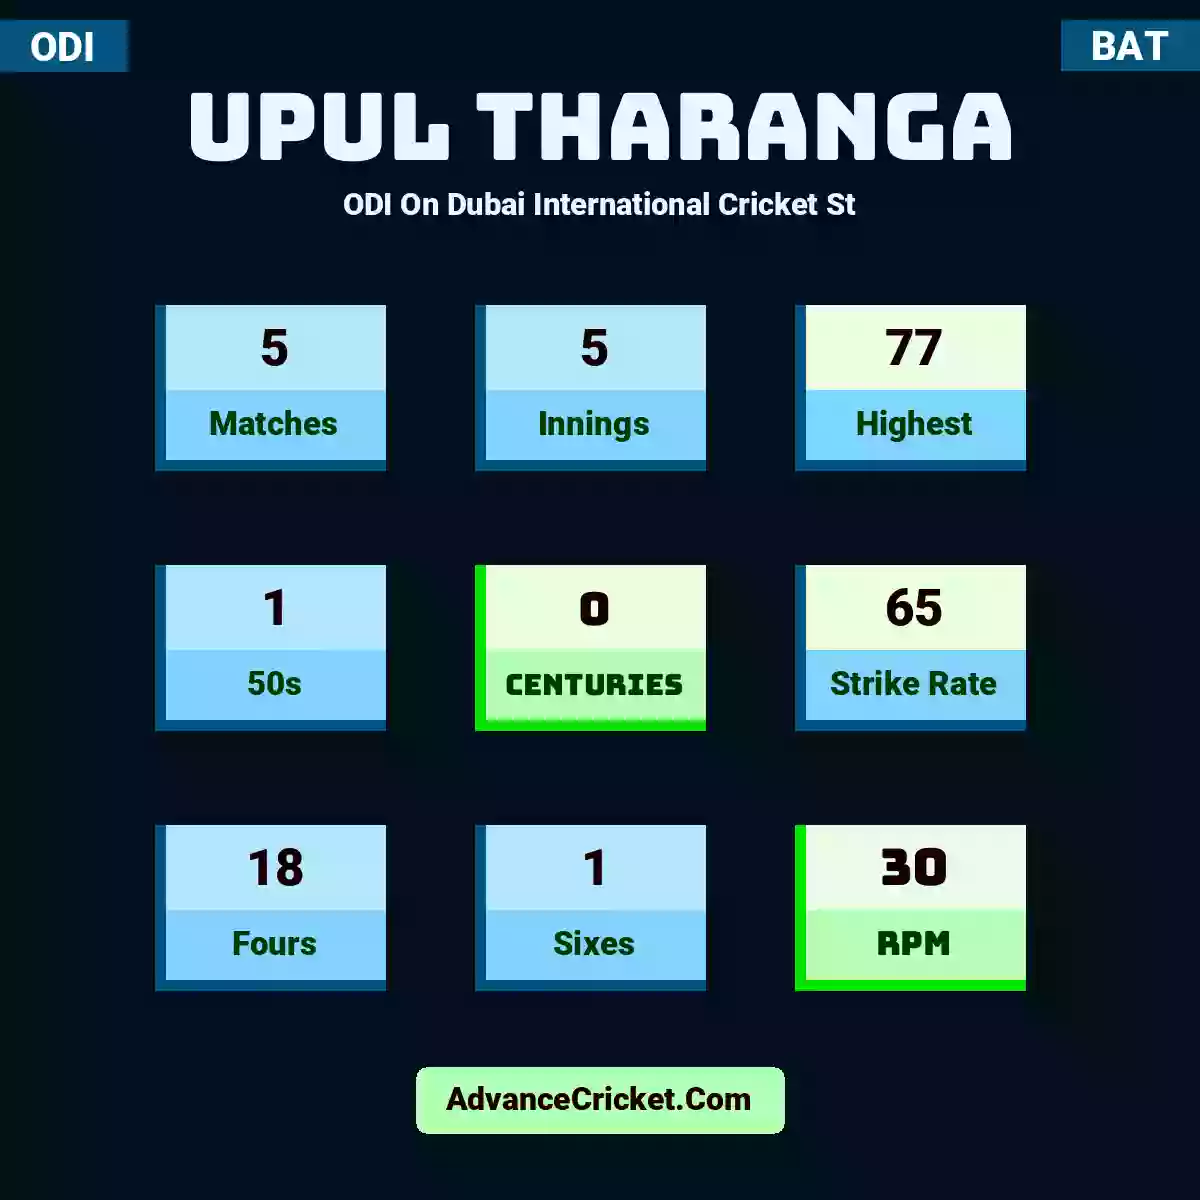 Upul Tharanga ODI  On Dubai International Cricket St, Upul Tharanga played 5 matches, scored 77 runs as highest, 1 half-centuries, and 0 centuries, with a strike rate of 65. U.Tharanga hit 18 fours and 1 sixes, with an RPM of 30.